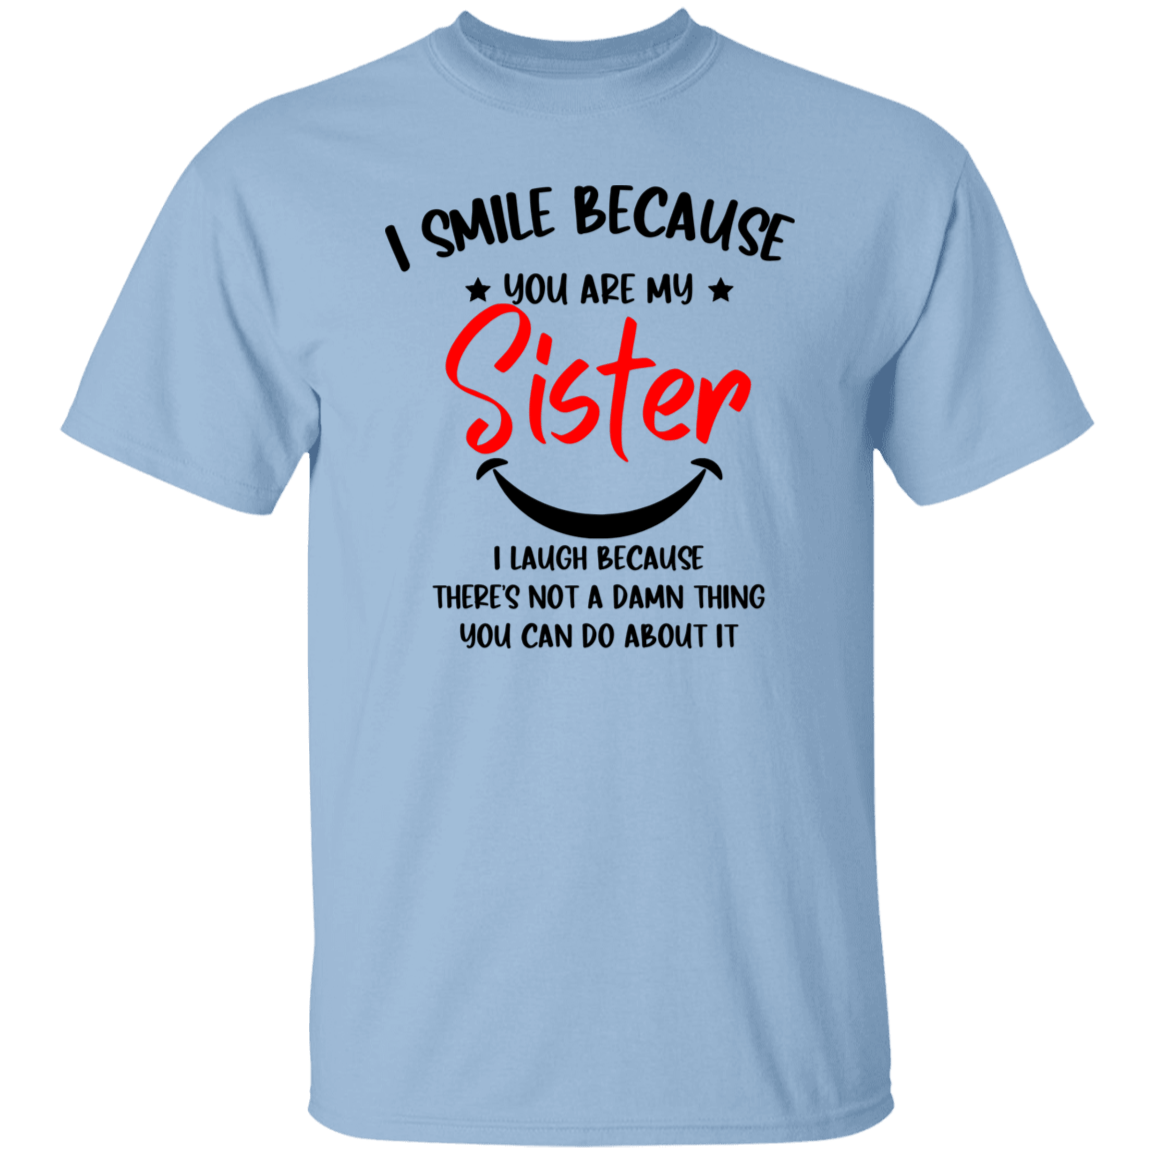 I Smile because (Sister) T-Shirt